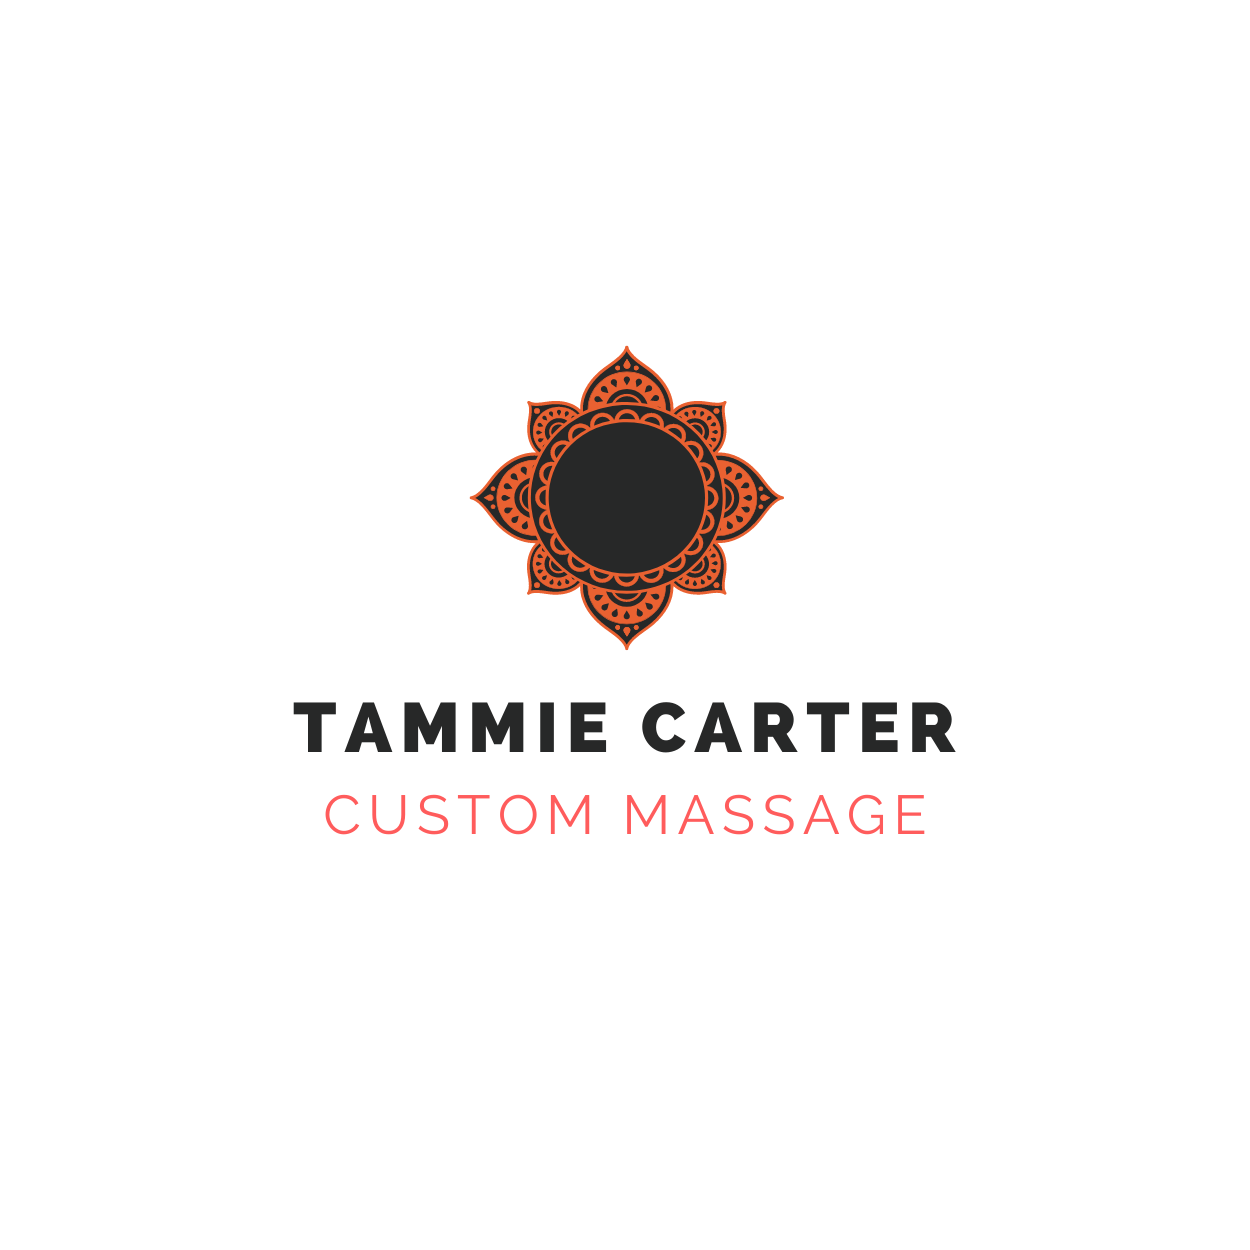 Tammie Carter Custom Massage